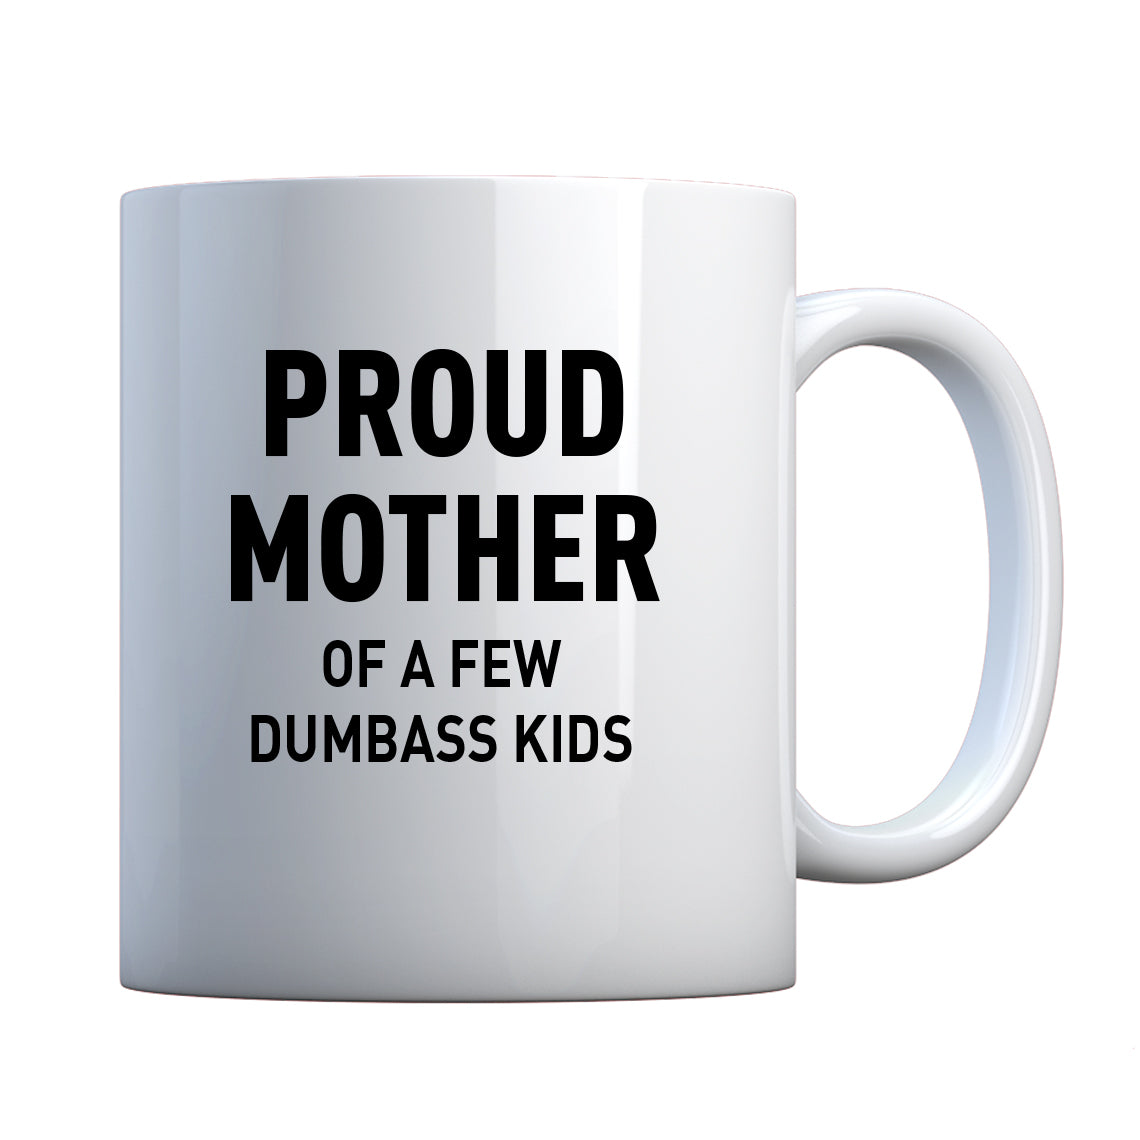 Proud Mother of Dumbass Kids Ceramic Gift Mug